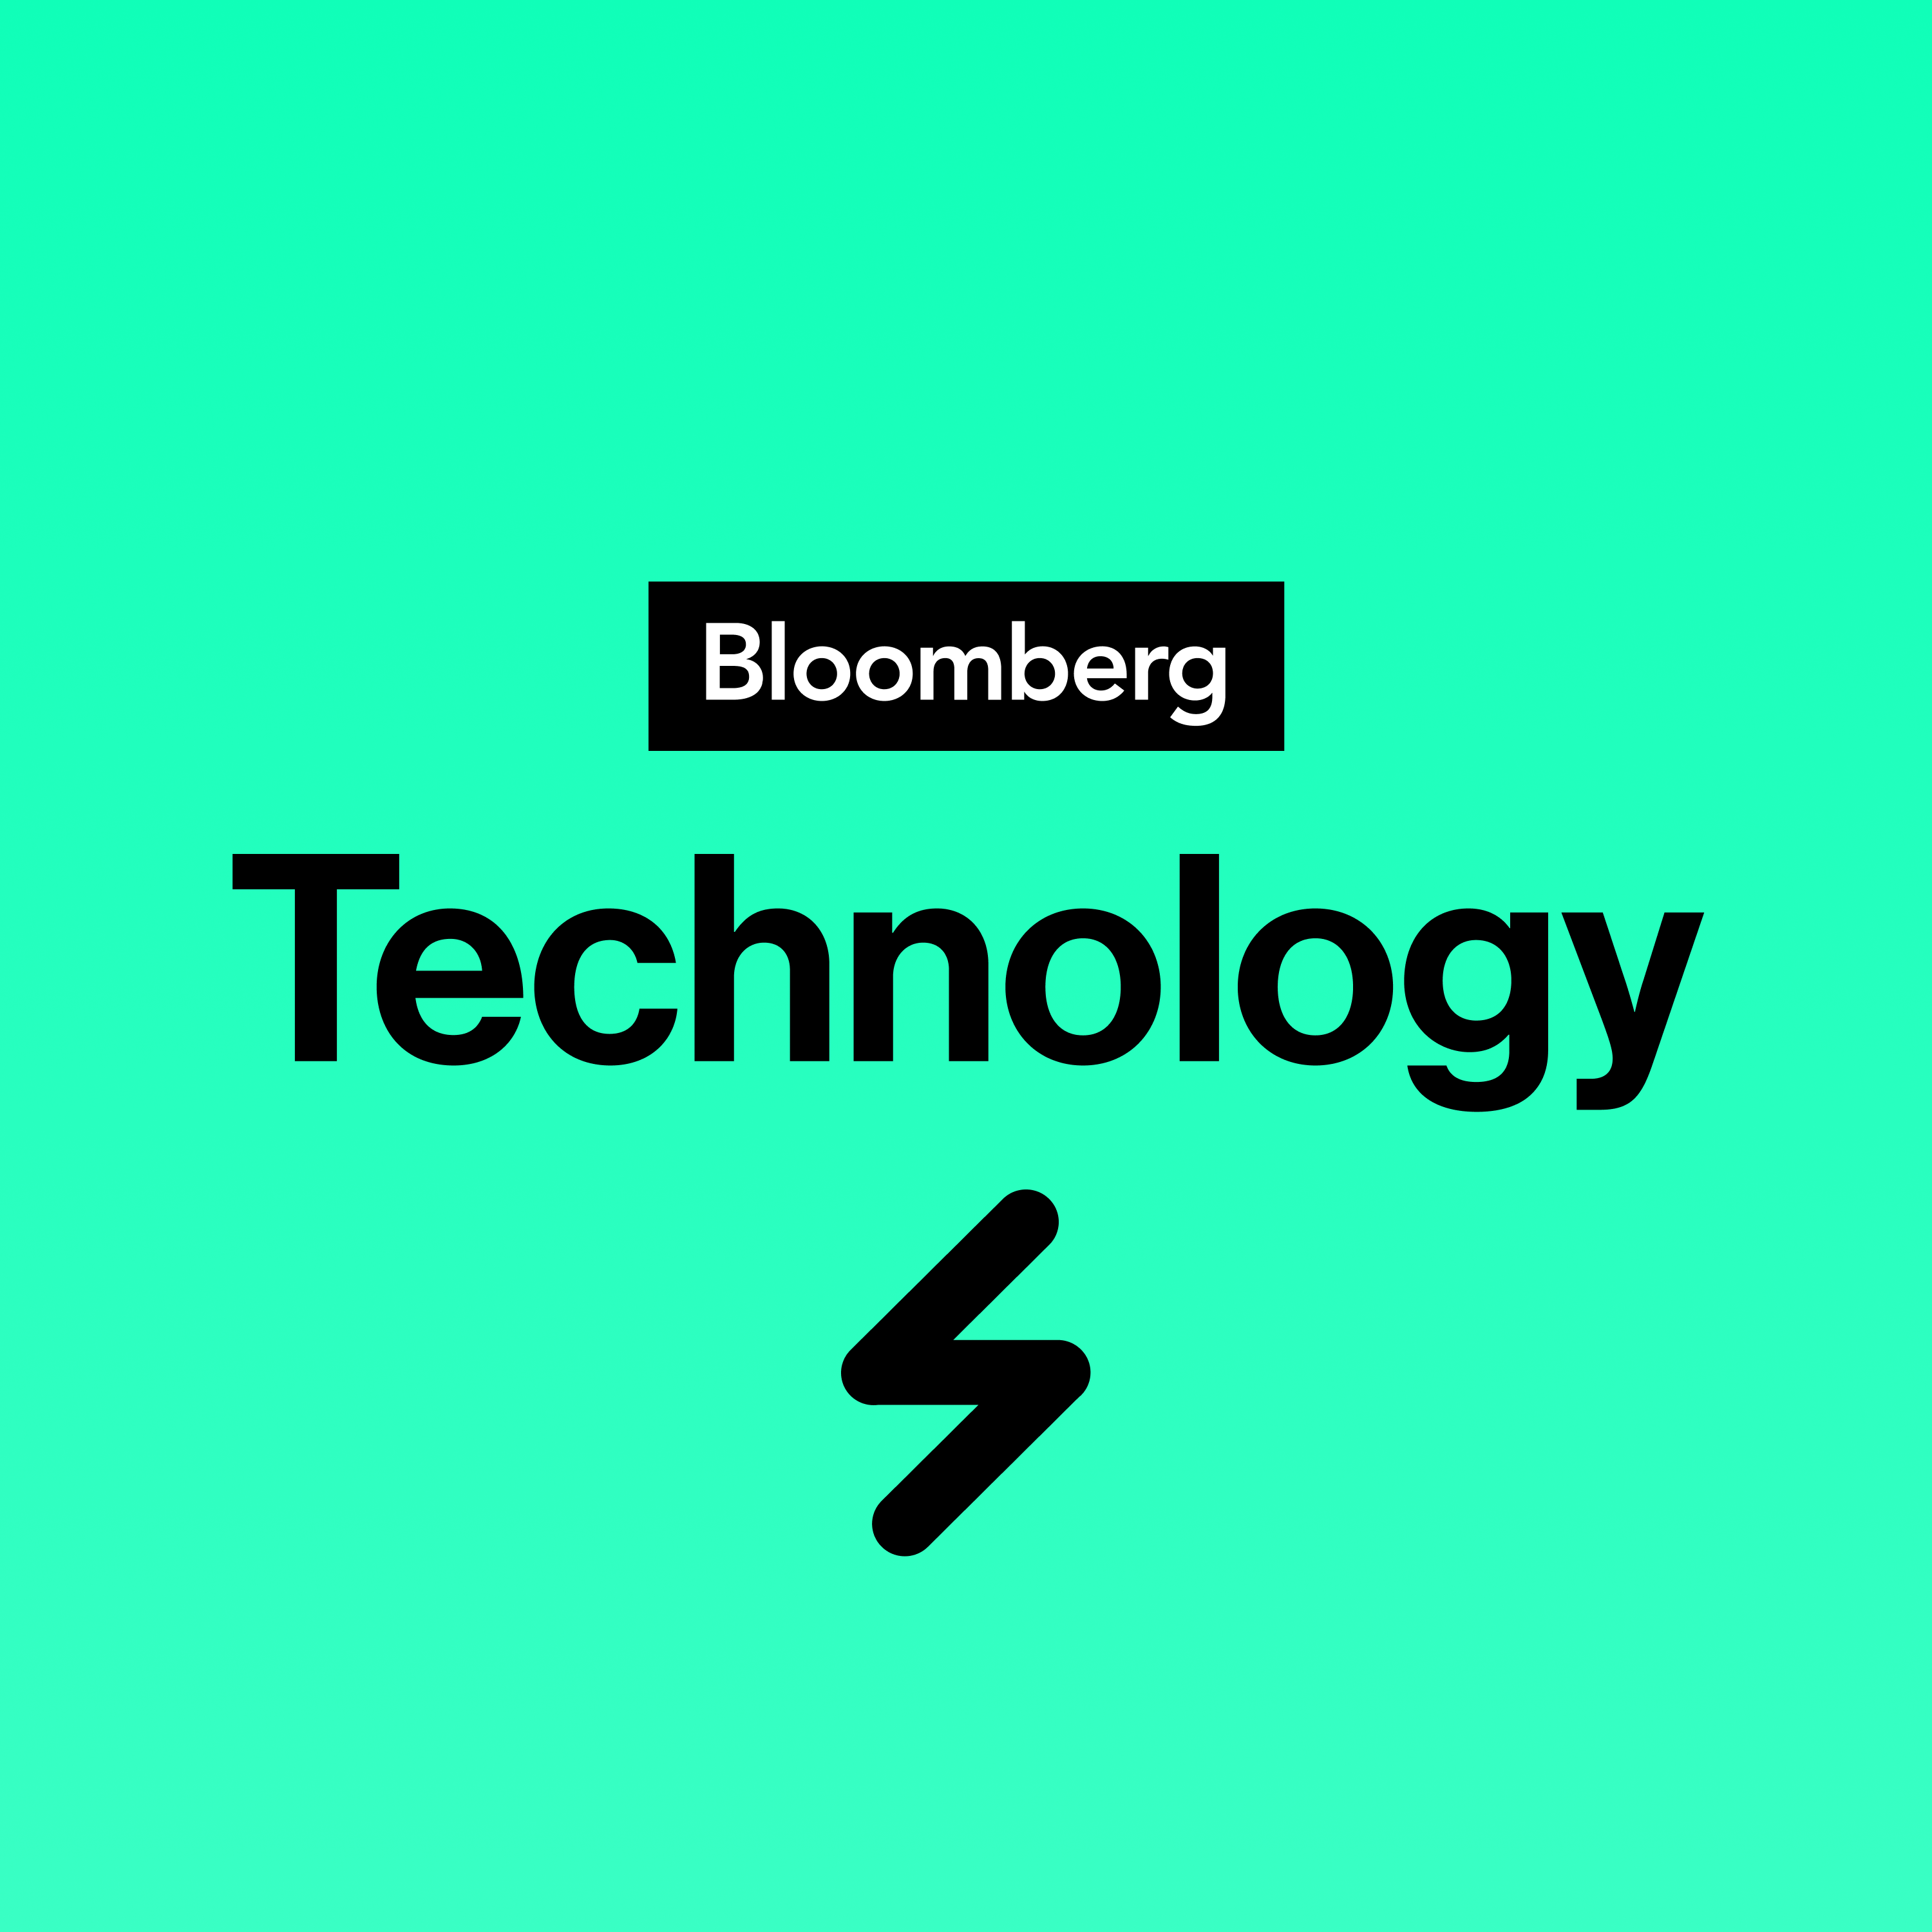 Outlook for Technology Stocks, Robinhood Unveils Credit Card, Mike Novogratz on Bitcoin